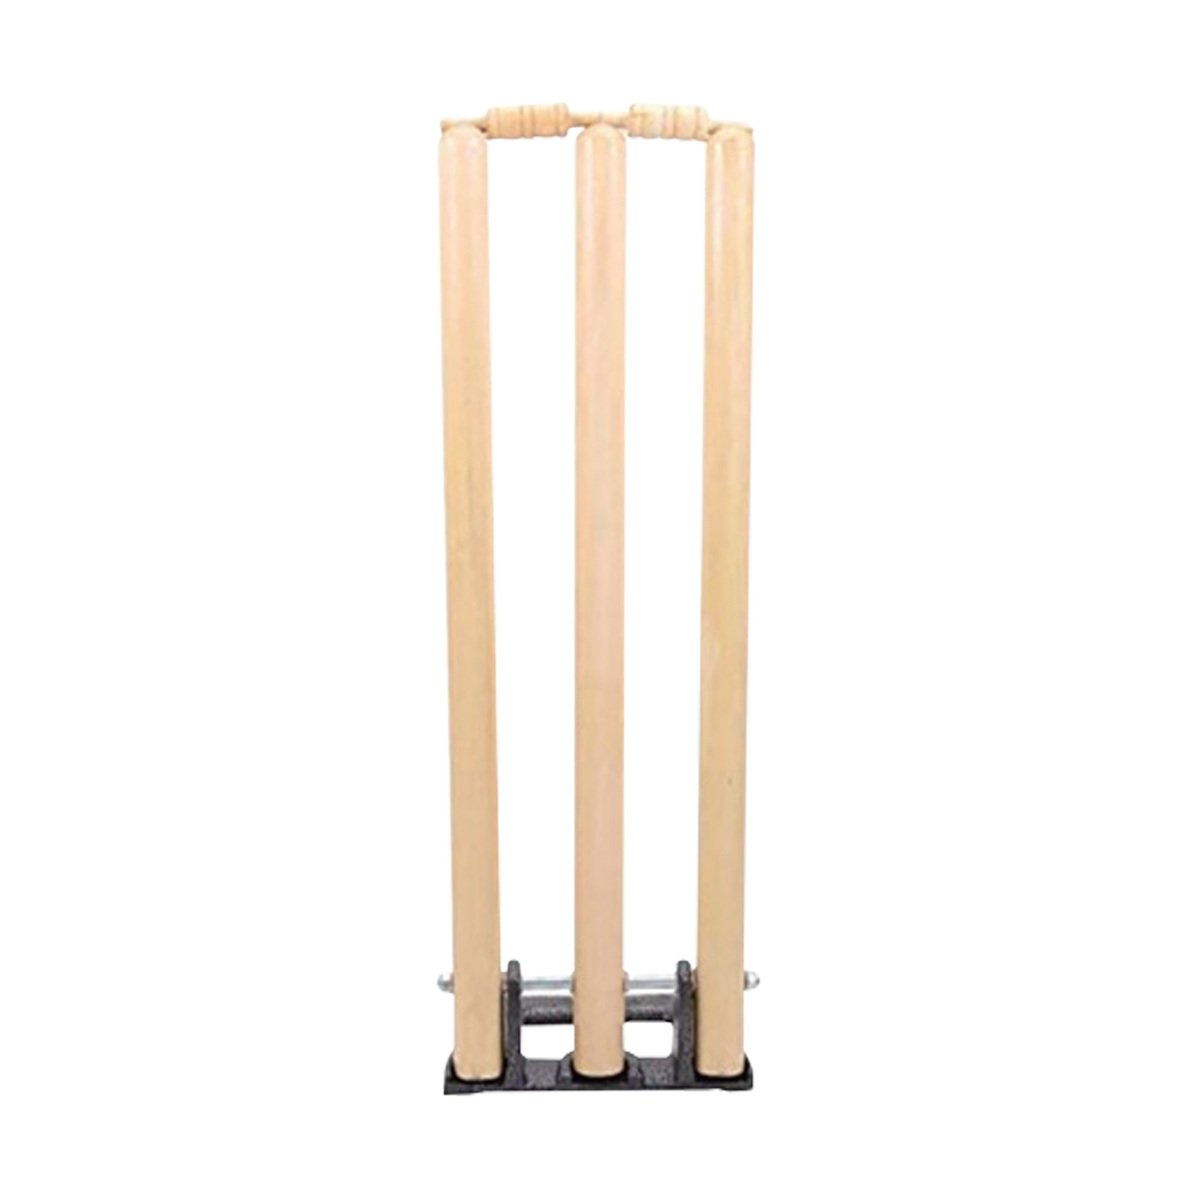 Cricket Stump Wood SP2012